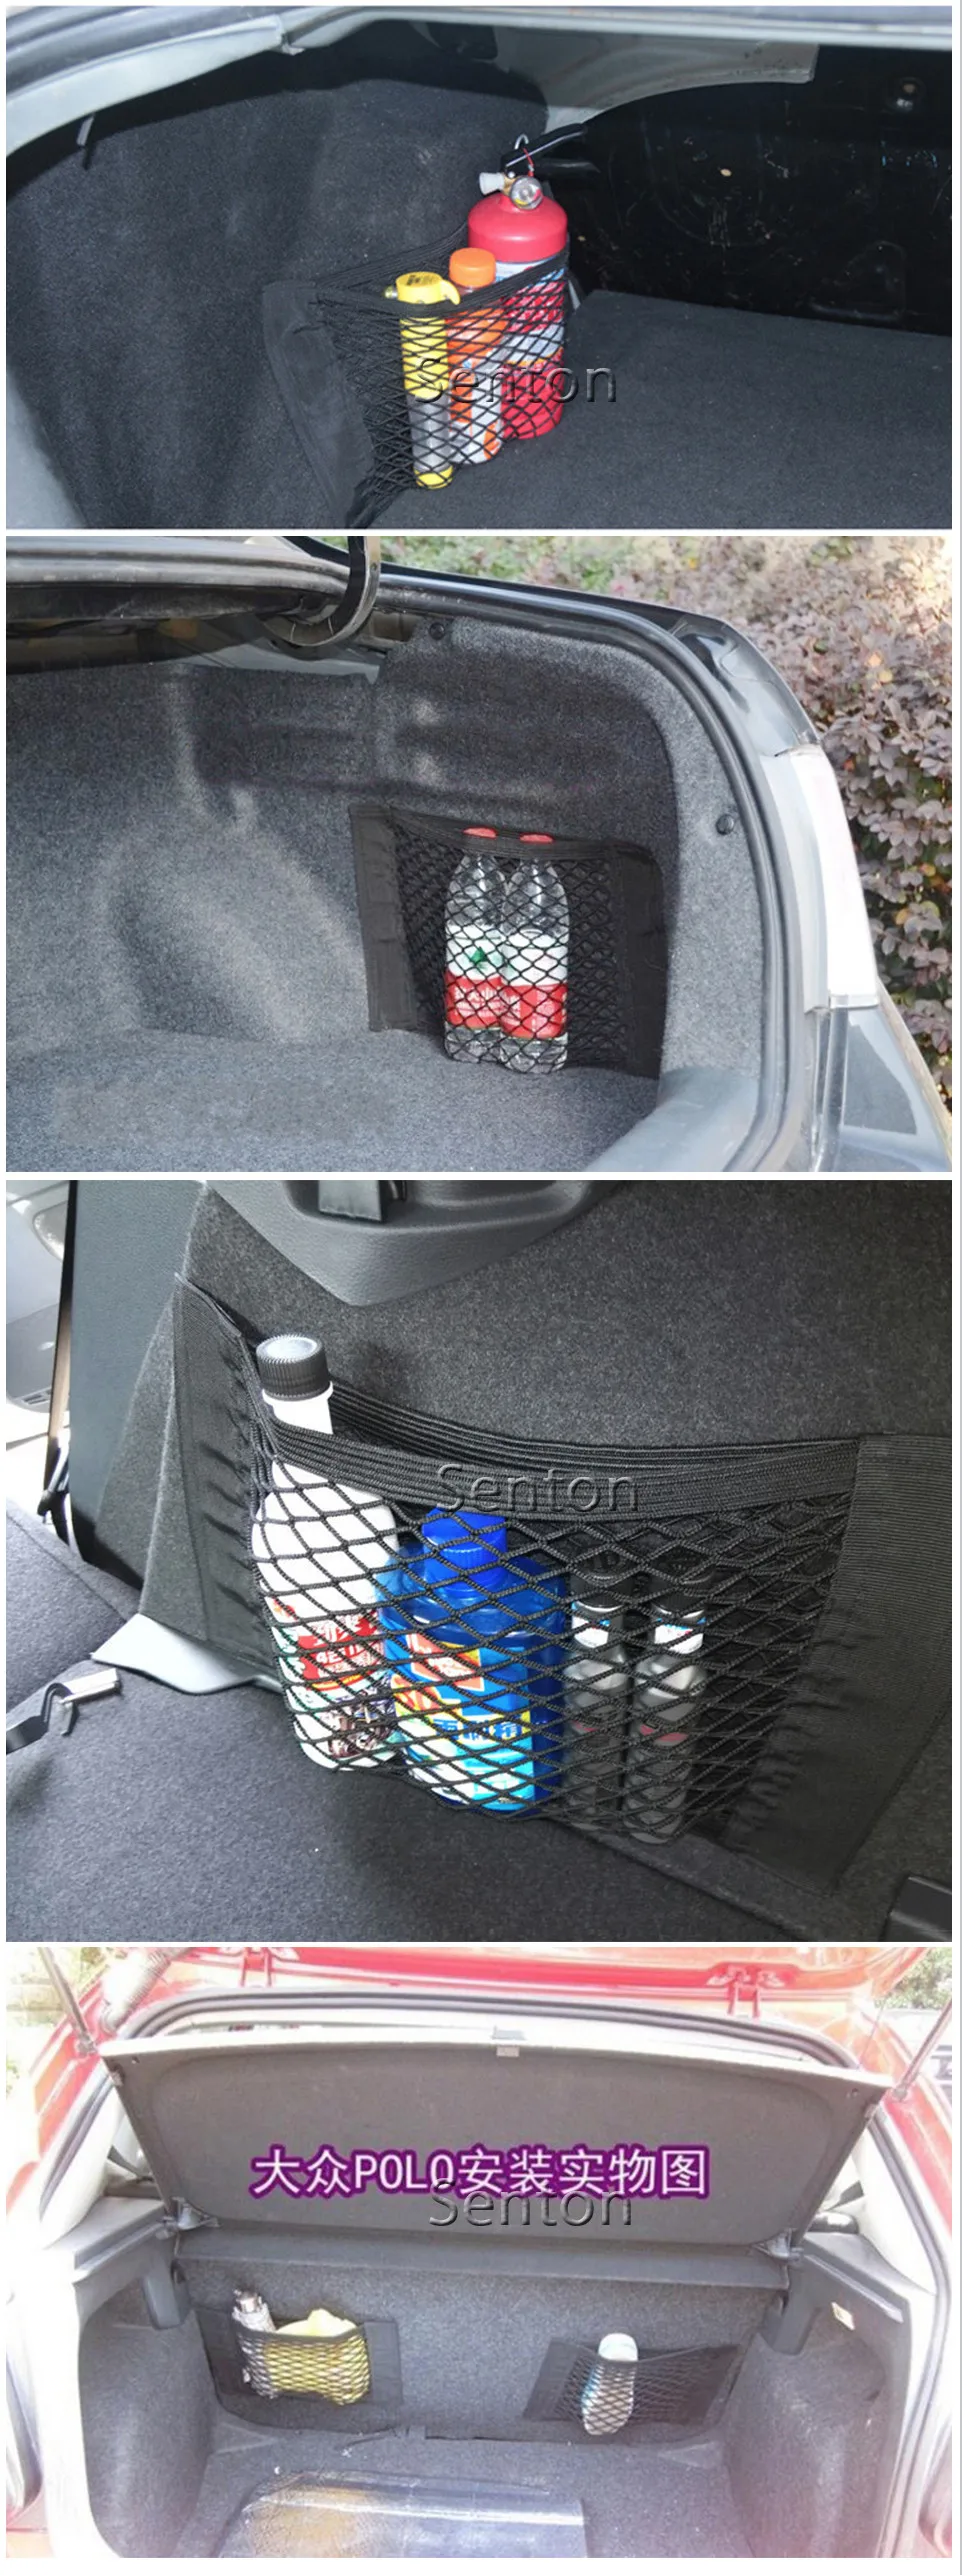 Багажная сетка для багажника автомобиля для Mini Cooper R56 R57 R58 R50 R53 F55 F56 Jaguar XE XF Pontiac Saab 9-3 9-5 93 Infiniti fx аксессуары